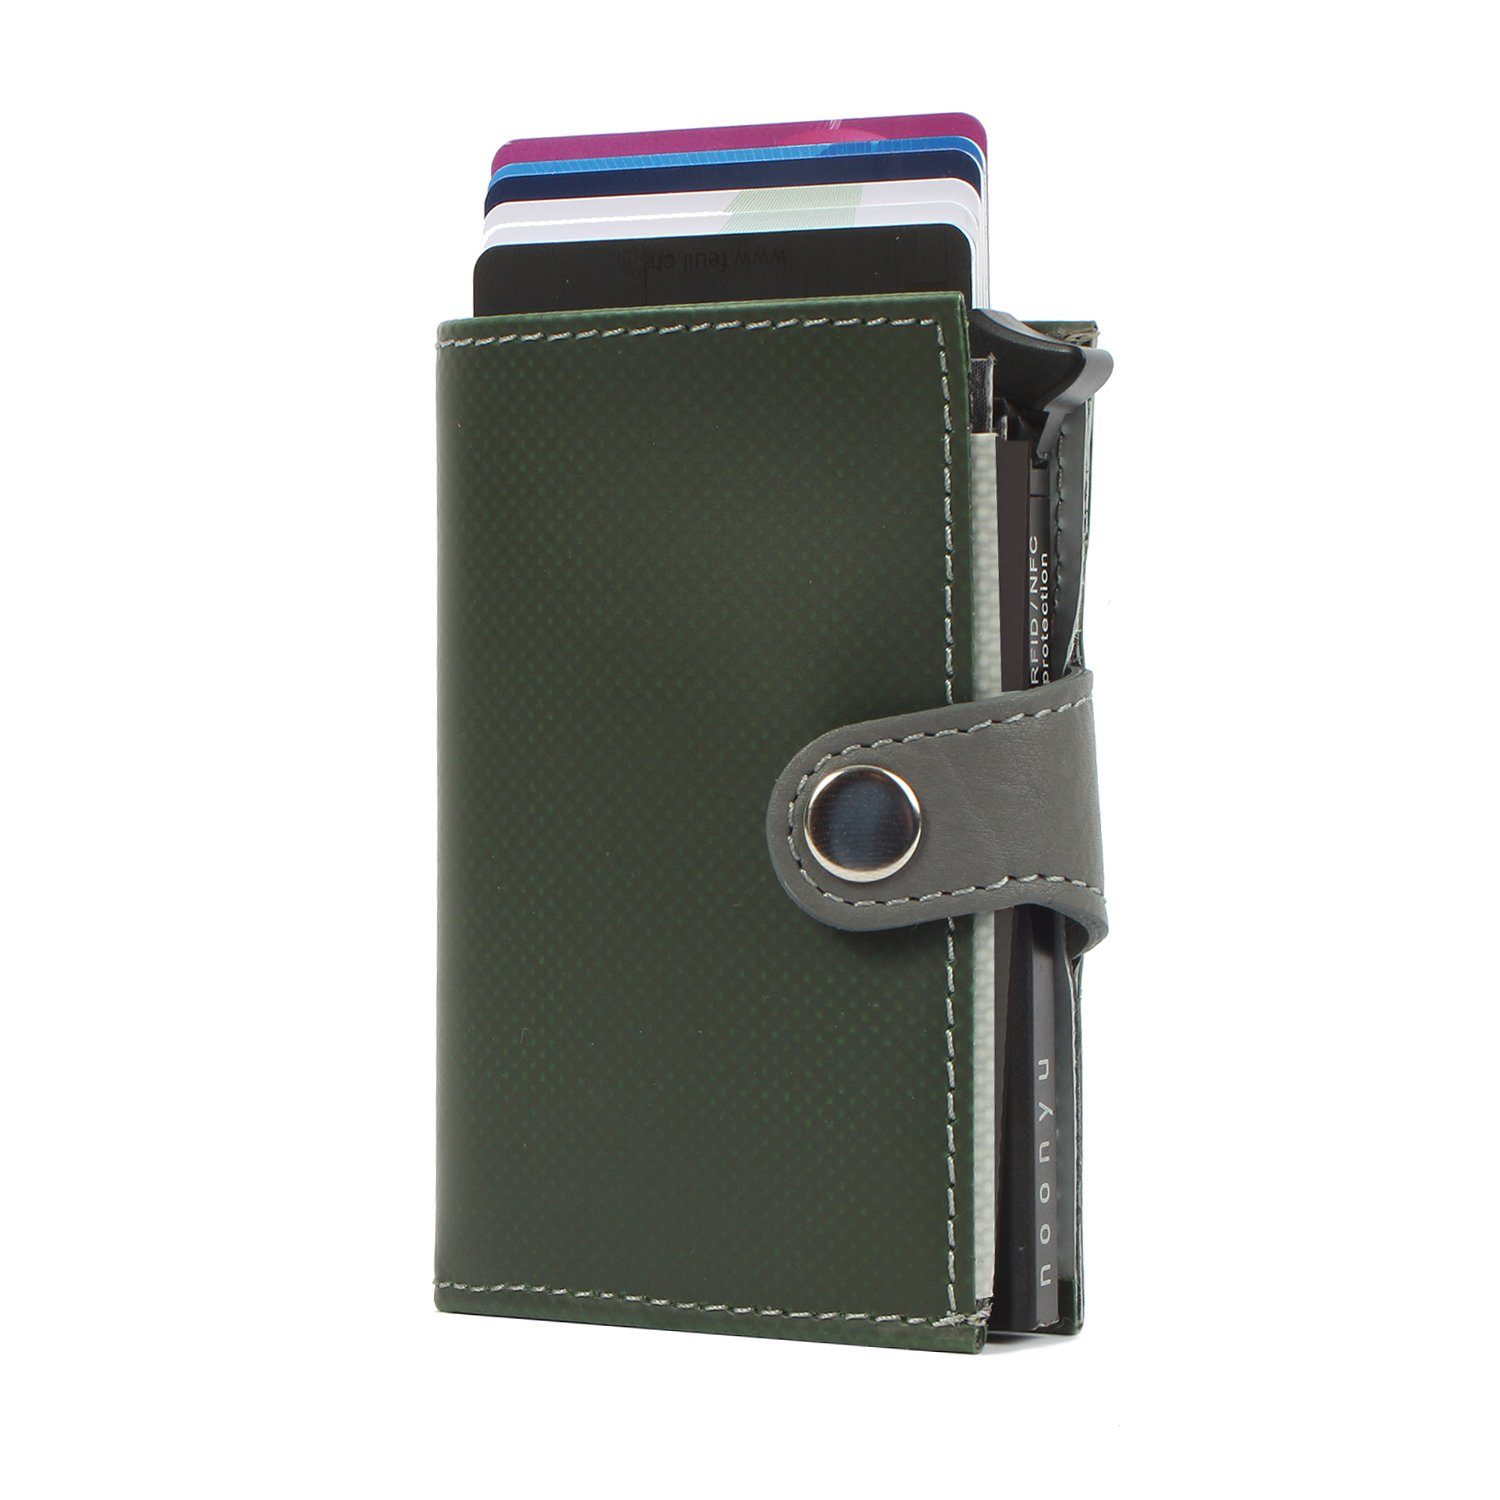 7clouds Mini Geldbörse Kreditkartenbörse noonyu tarpaulin, single Tarpaulin Upcycling junglegreen aus